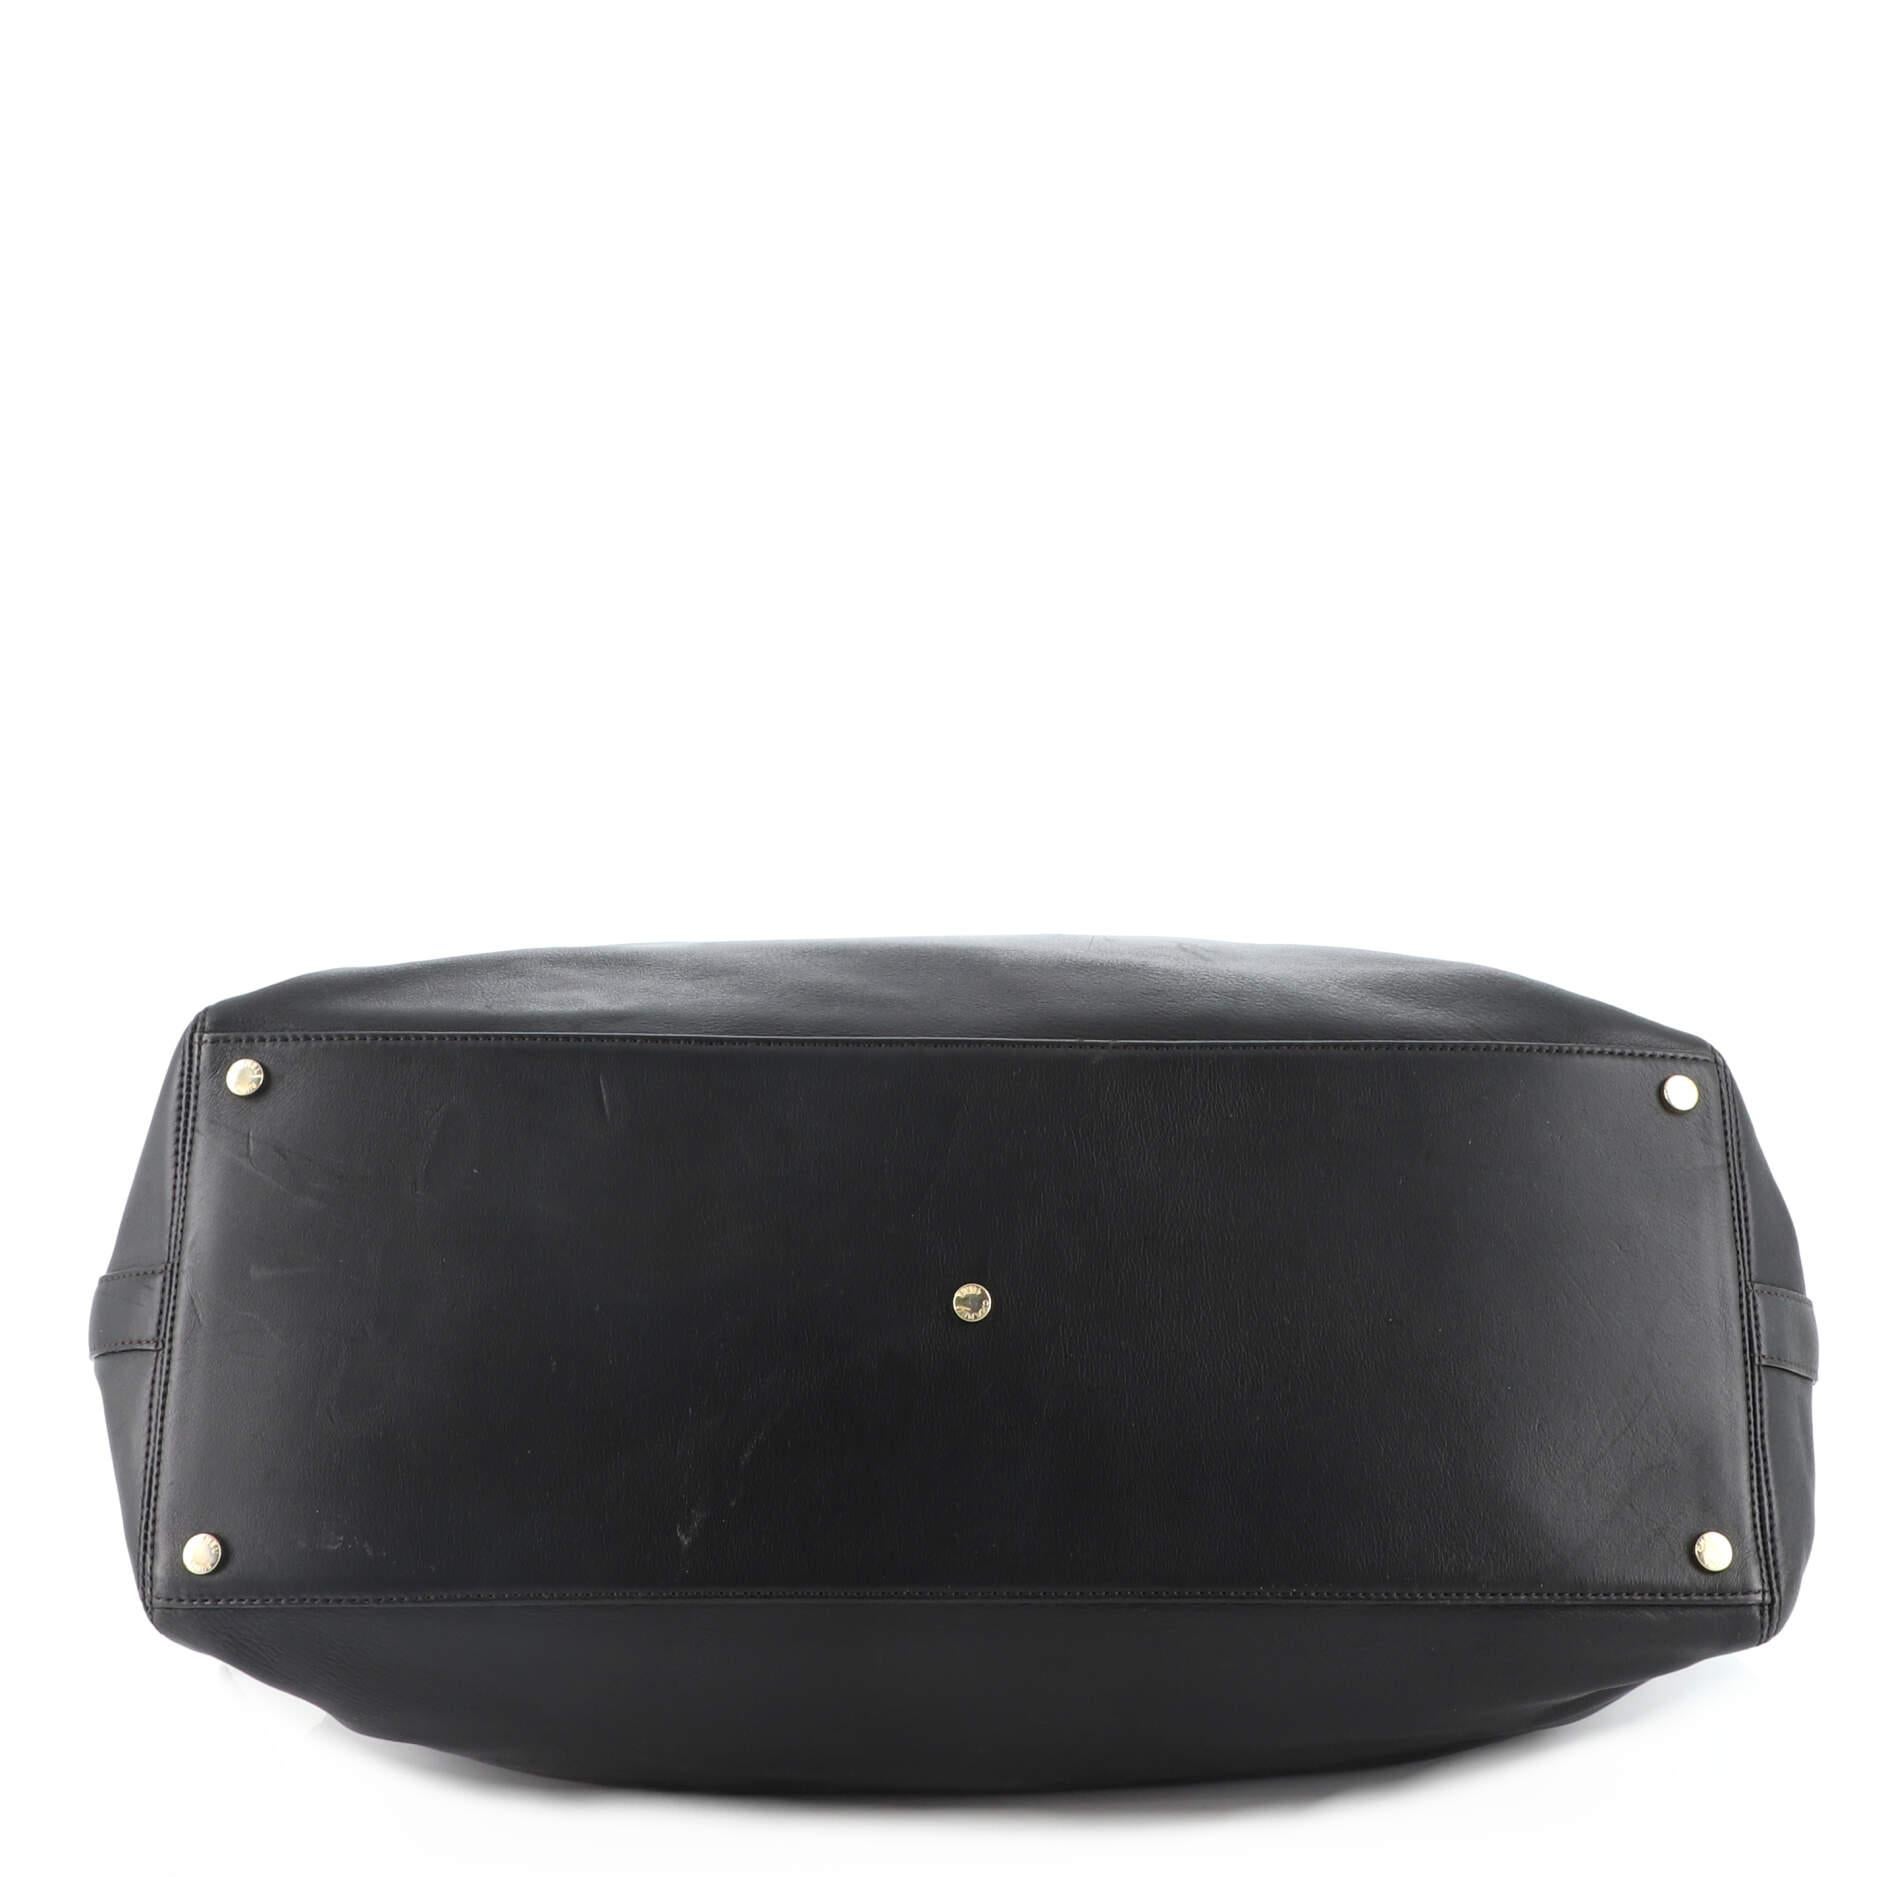 Black Chanel Vintage Convertible Weekender Bag Leather Large